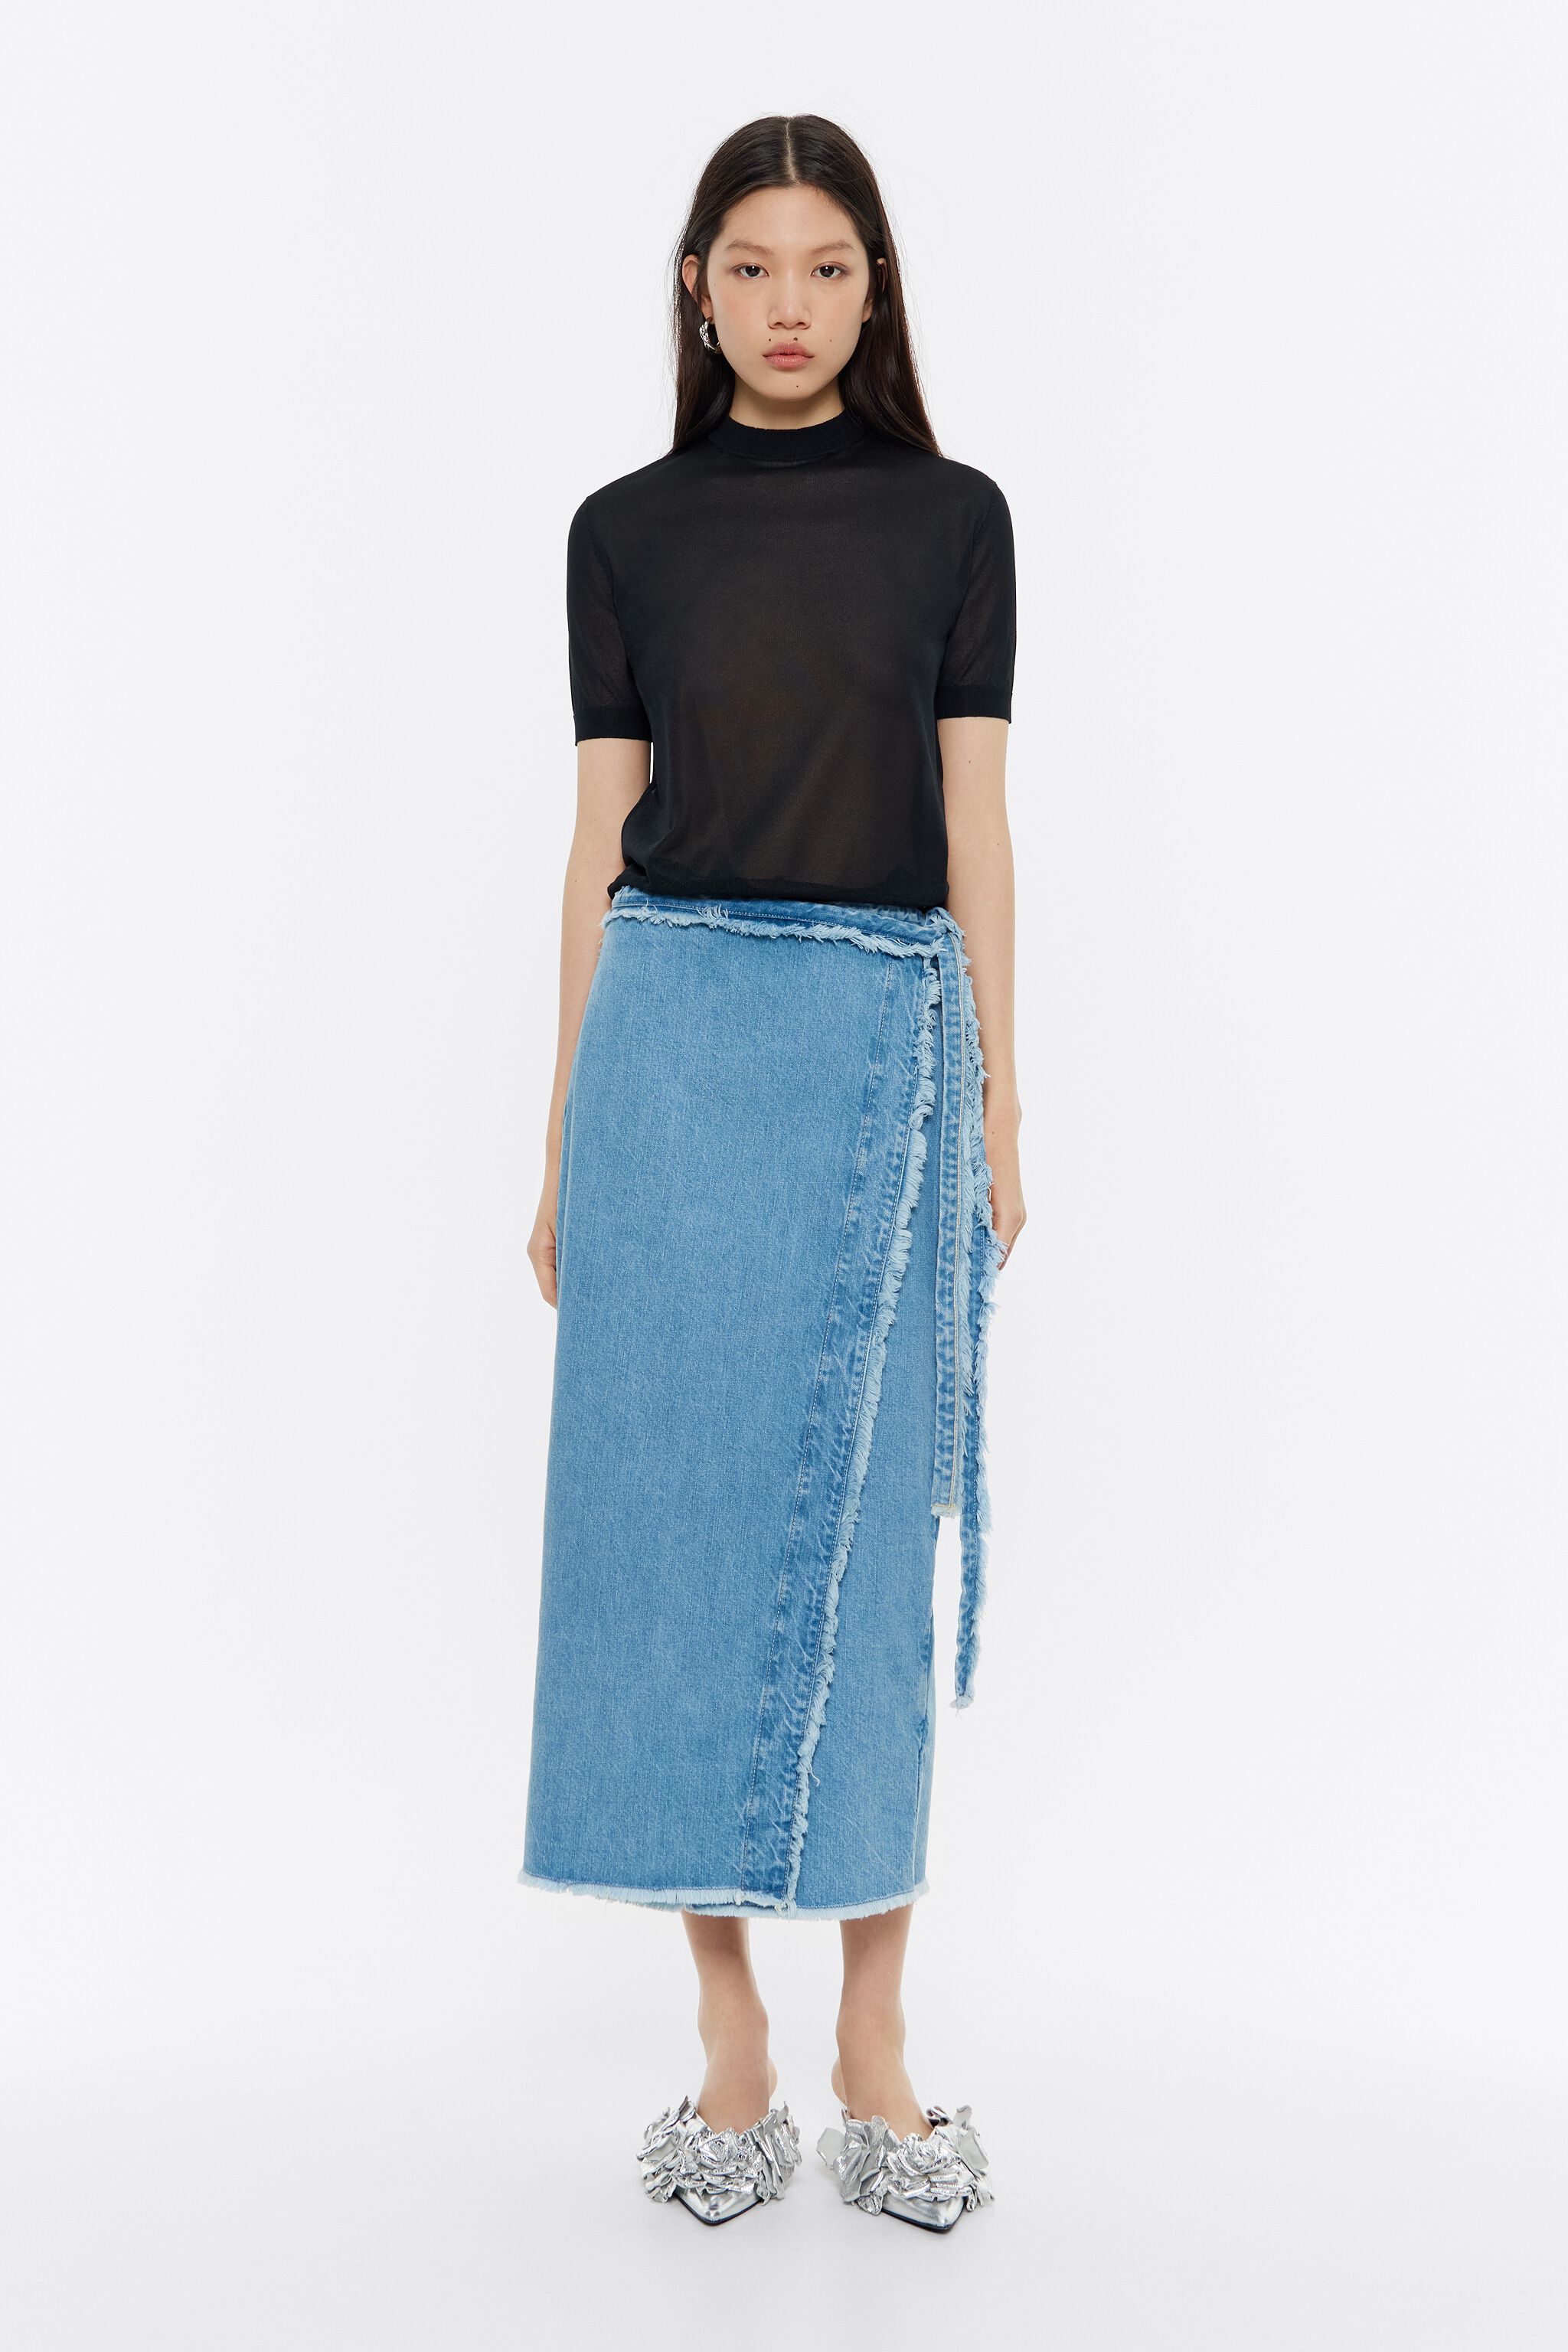 Buy Women's Blue Solid A-Line Denim Skirt Online at Bewakoof